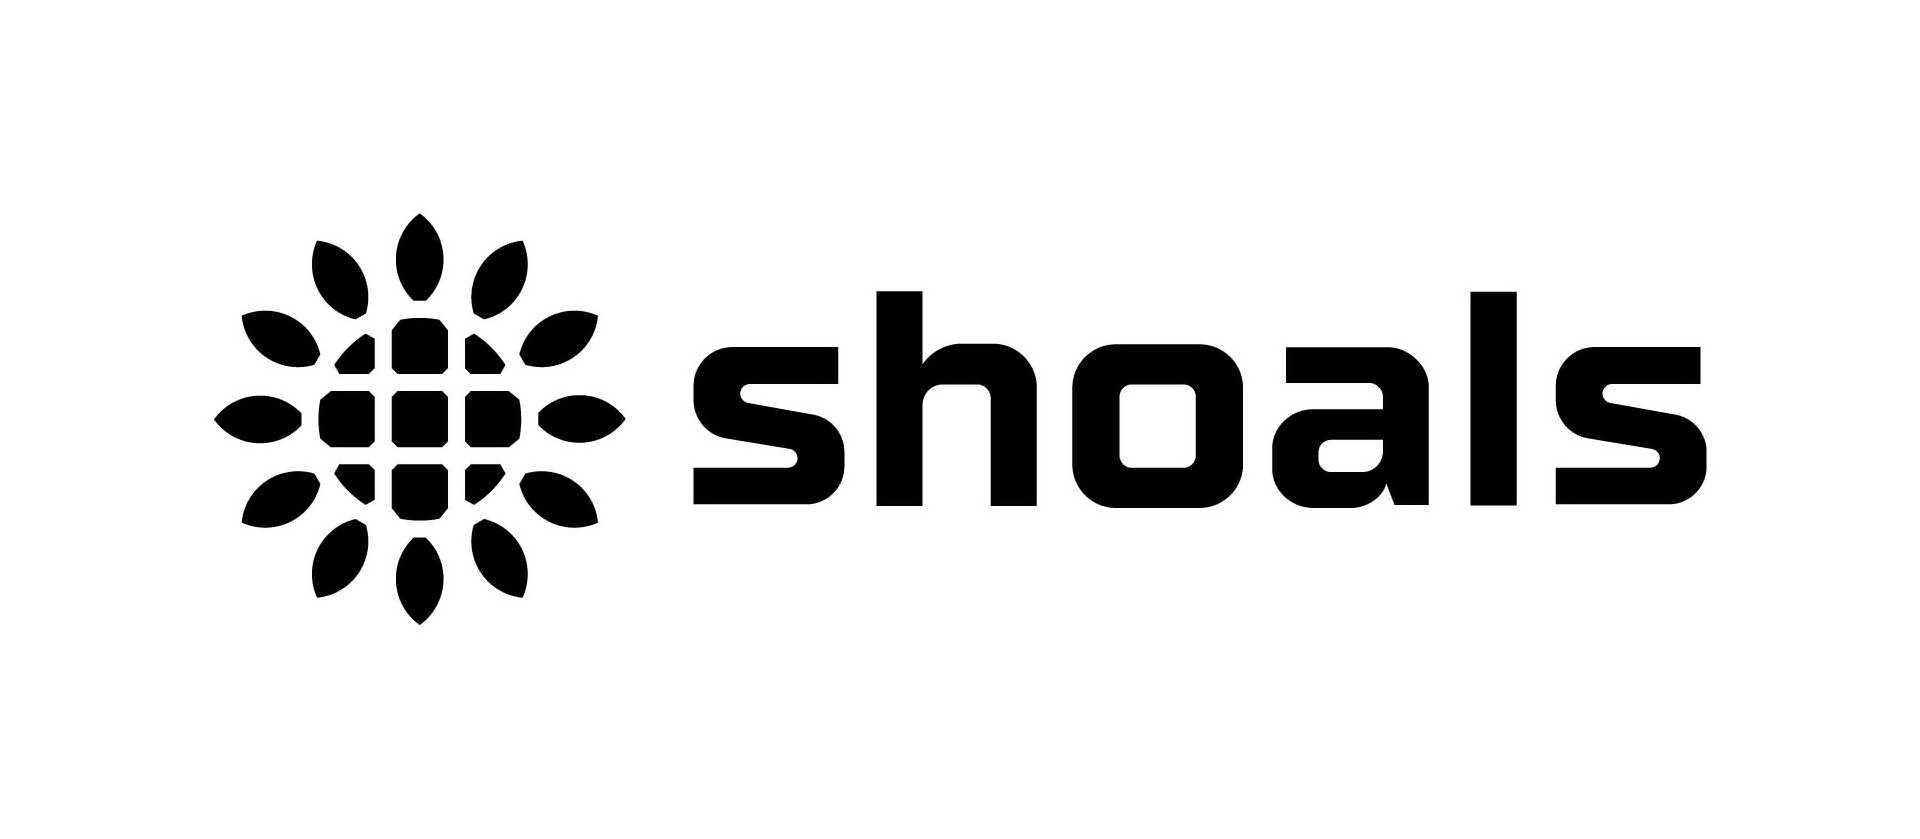 Trademark Logo SHOALS